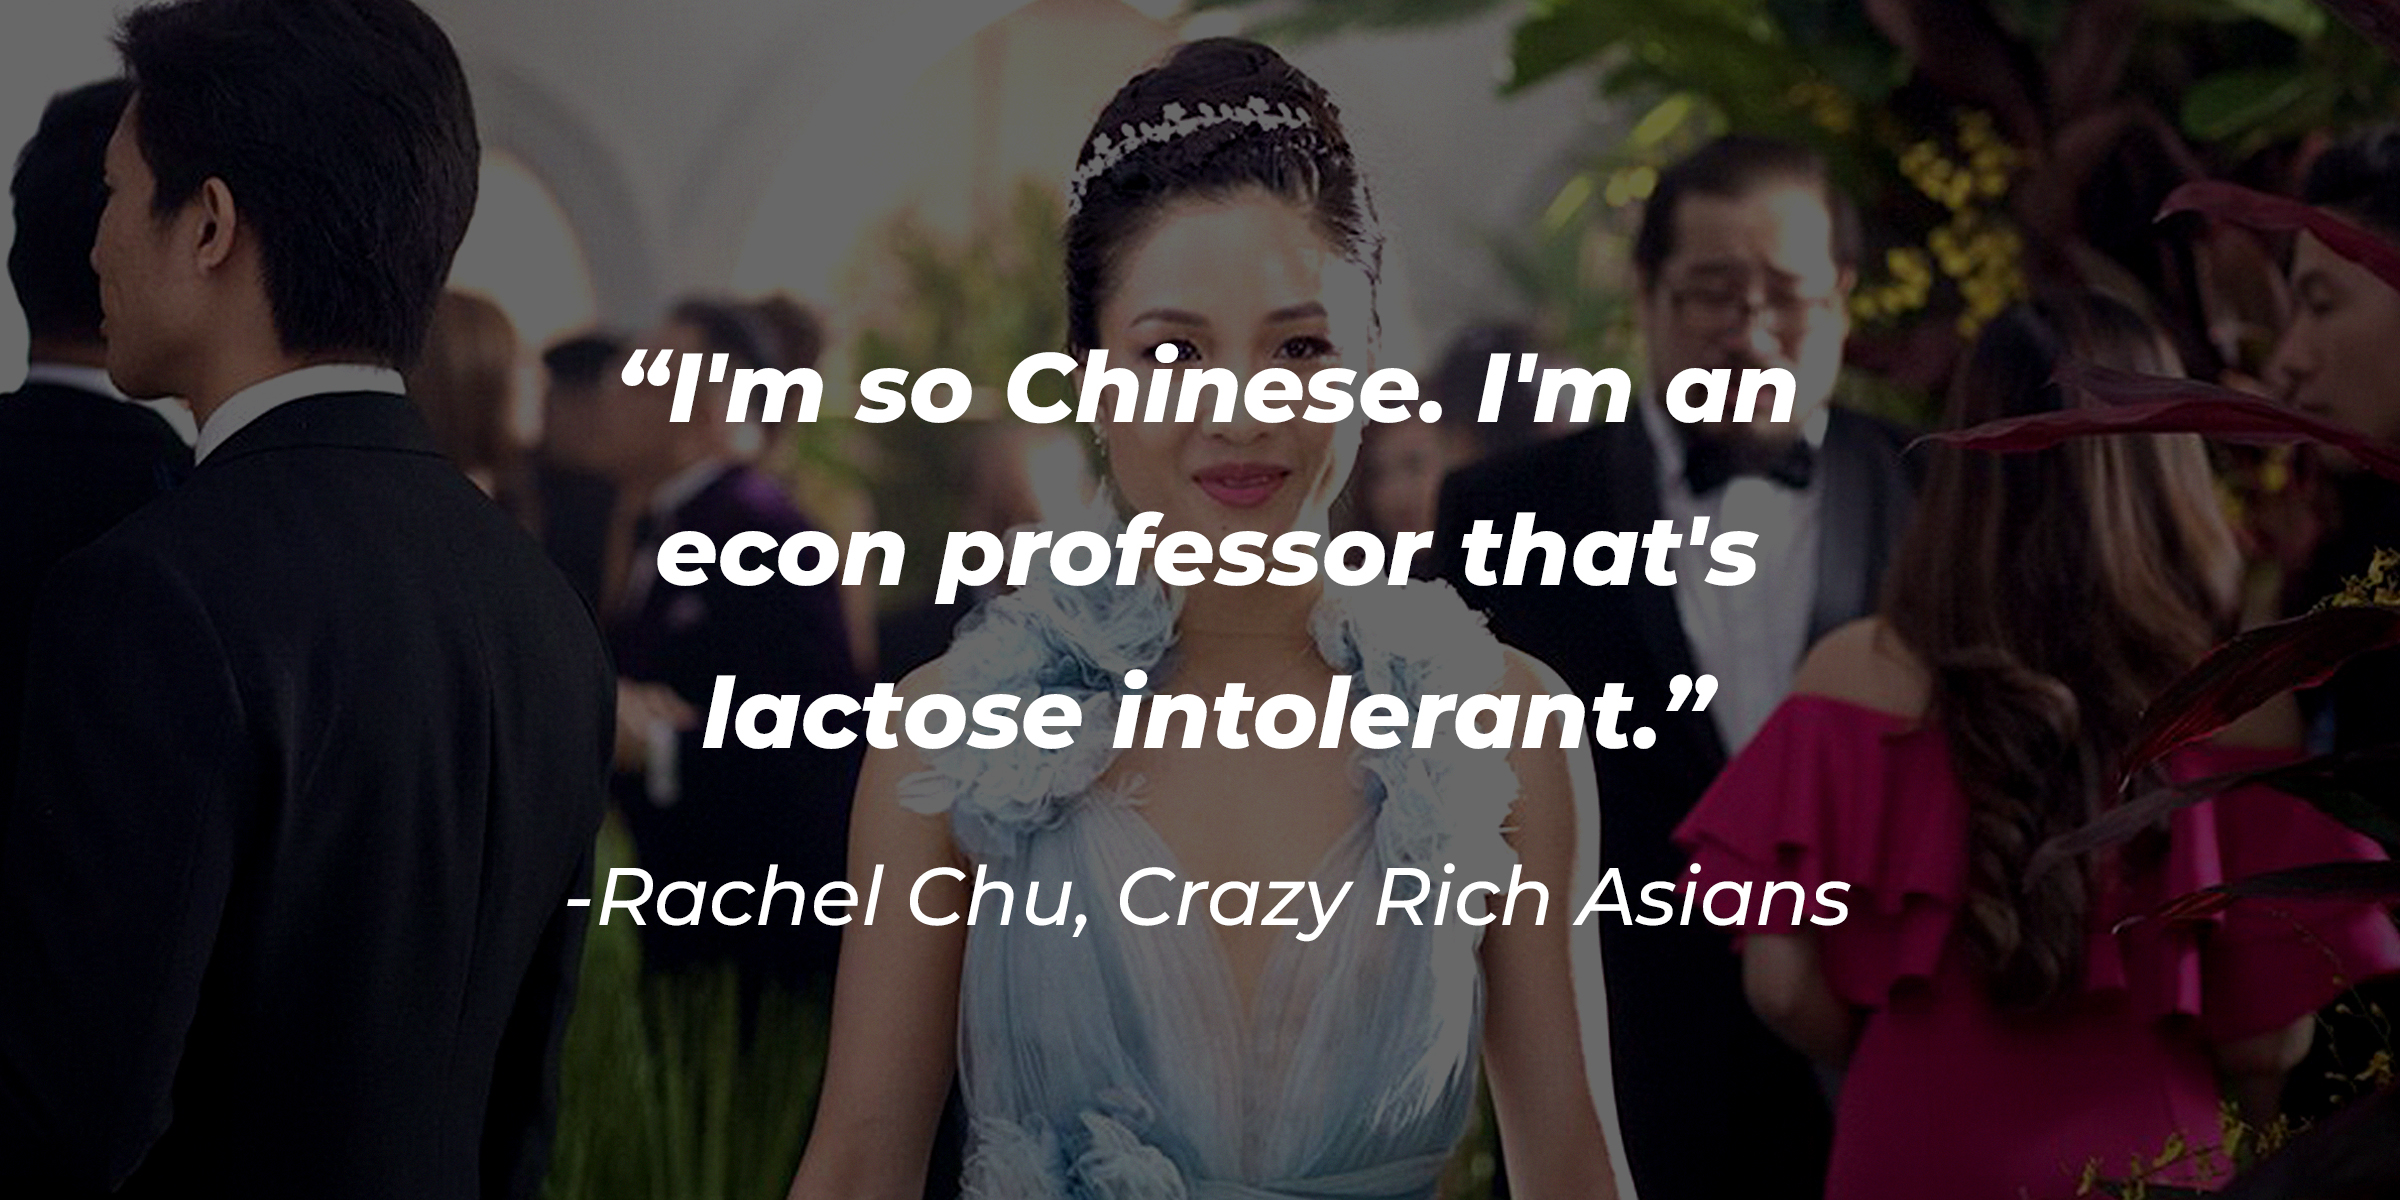 Rachel Chu's quote: "I'm so Chinese. I'm an econ professor that's lactose intolerant" | Source: Facebook/CrazyRichAsiansMovie